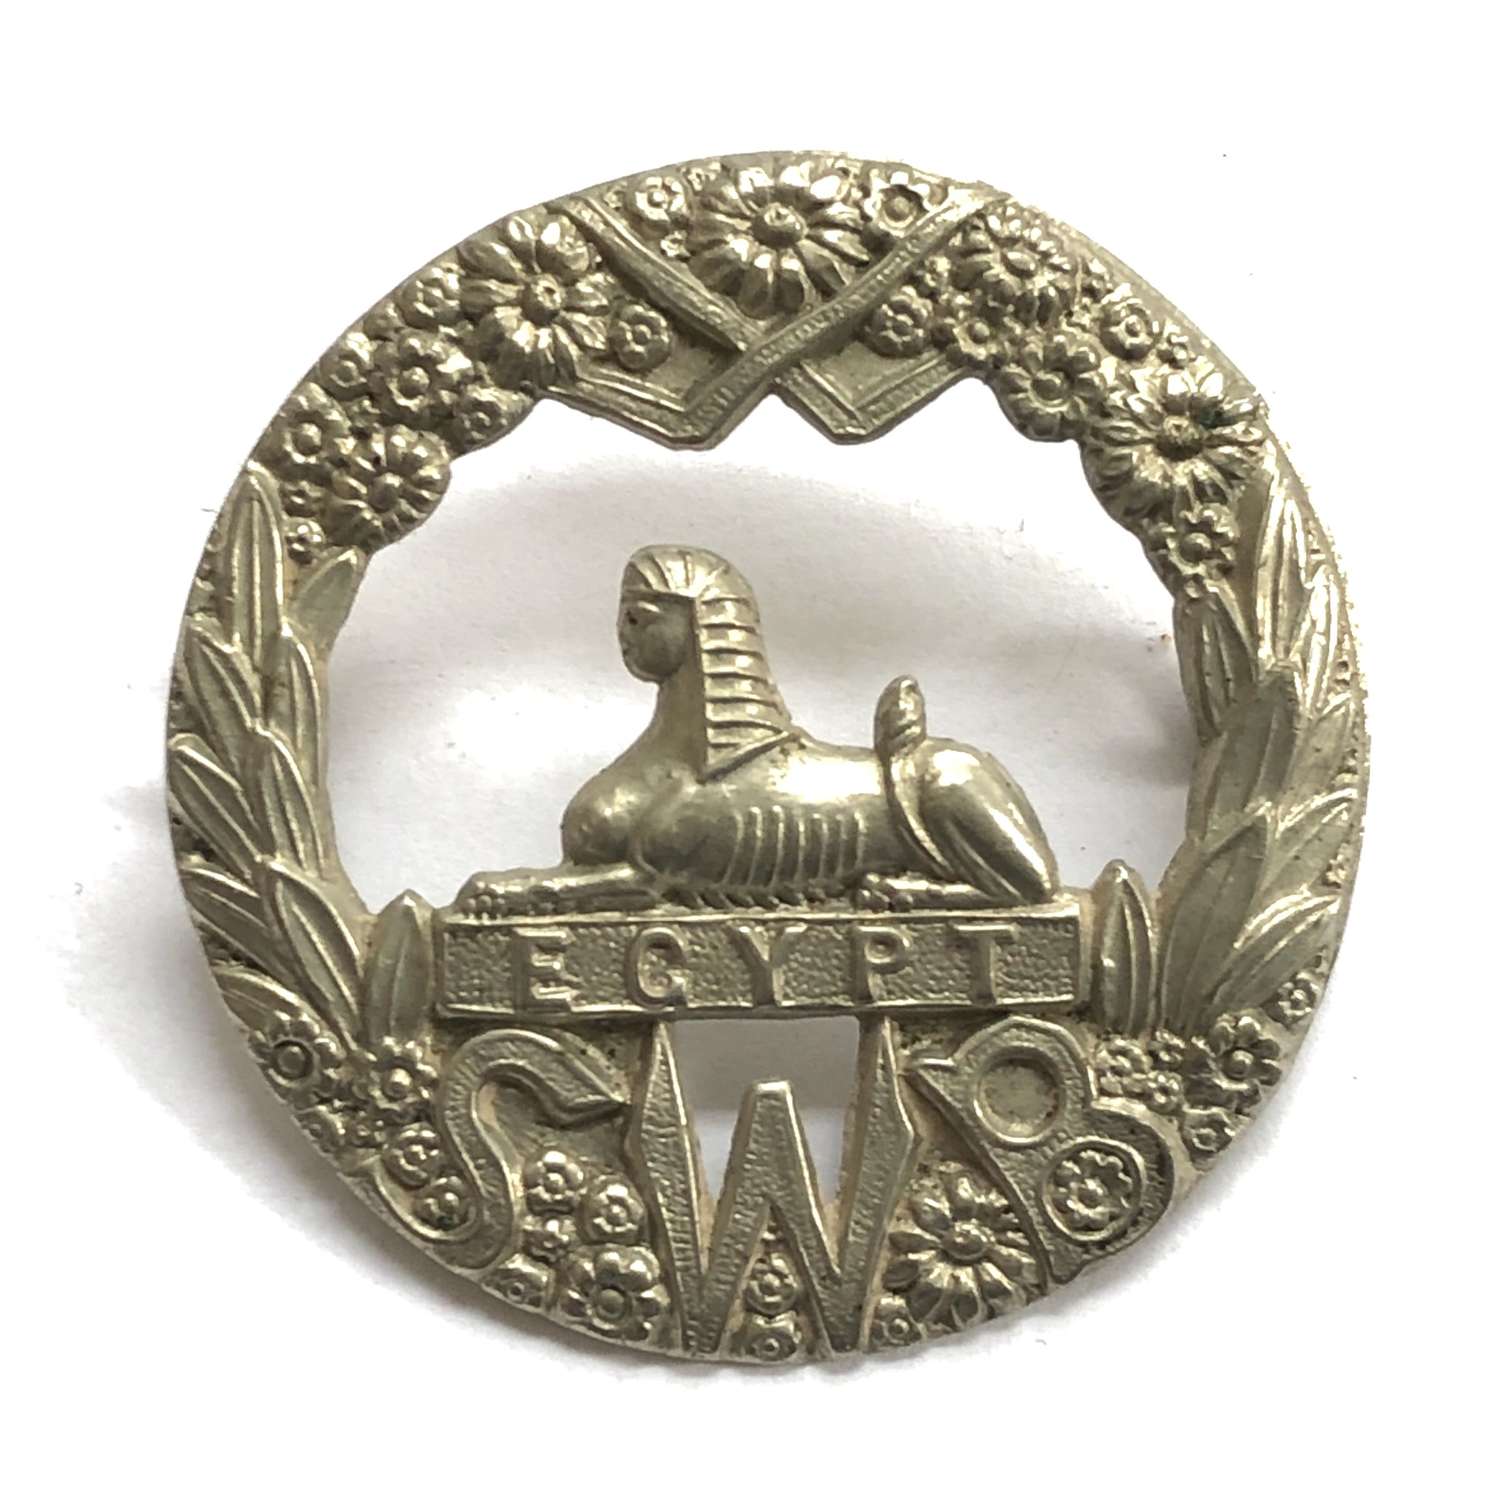 South Wales Borderers white metal cap badge c1896-1908